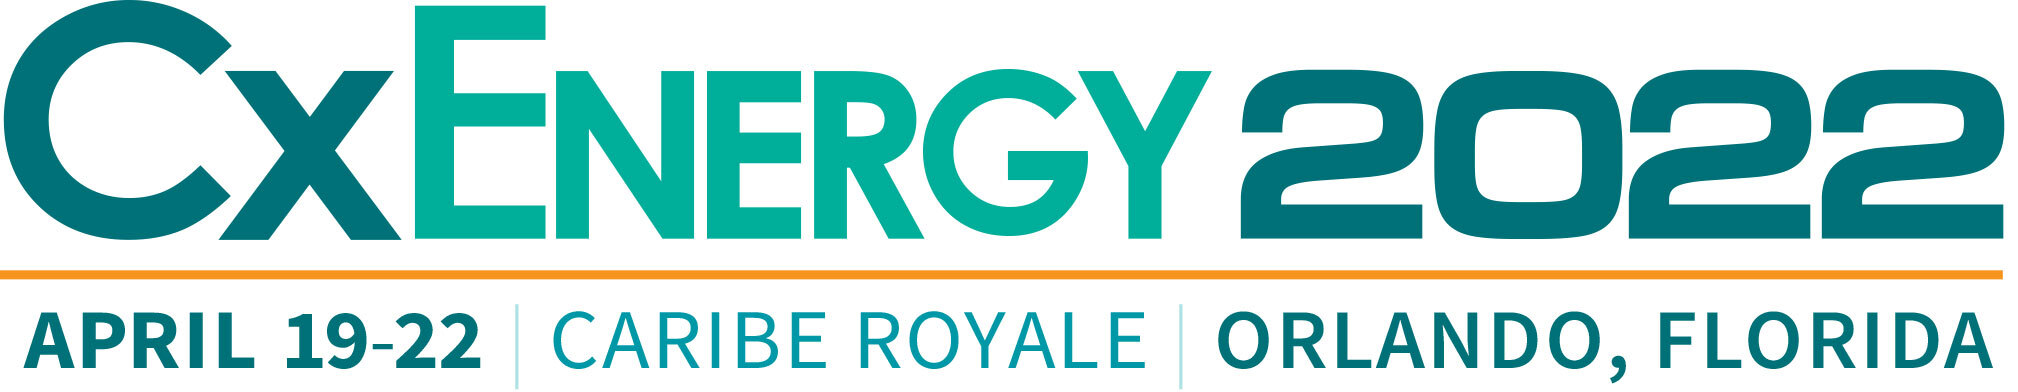 CxEnergy 2022 Logo